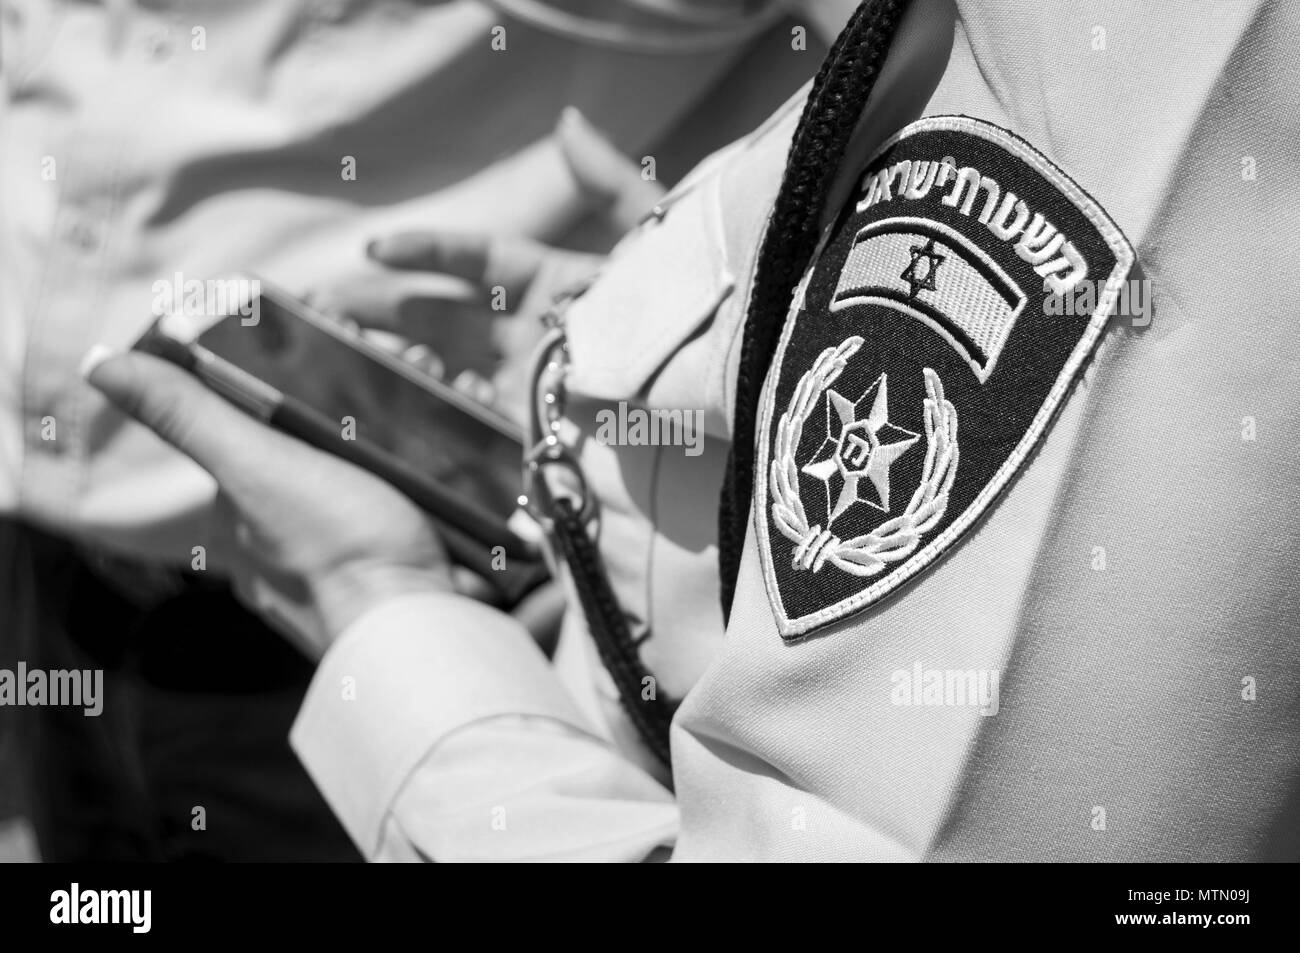 TEL AVIV, ISRAEL. April 9, 2014. Israeli female police officer with an emblem on her uniform holding cellular phone in her hands. Israel police Stock Photo